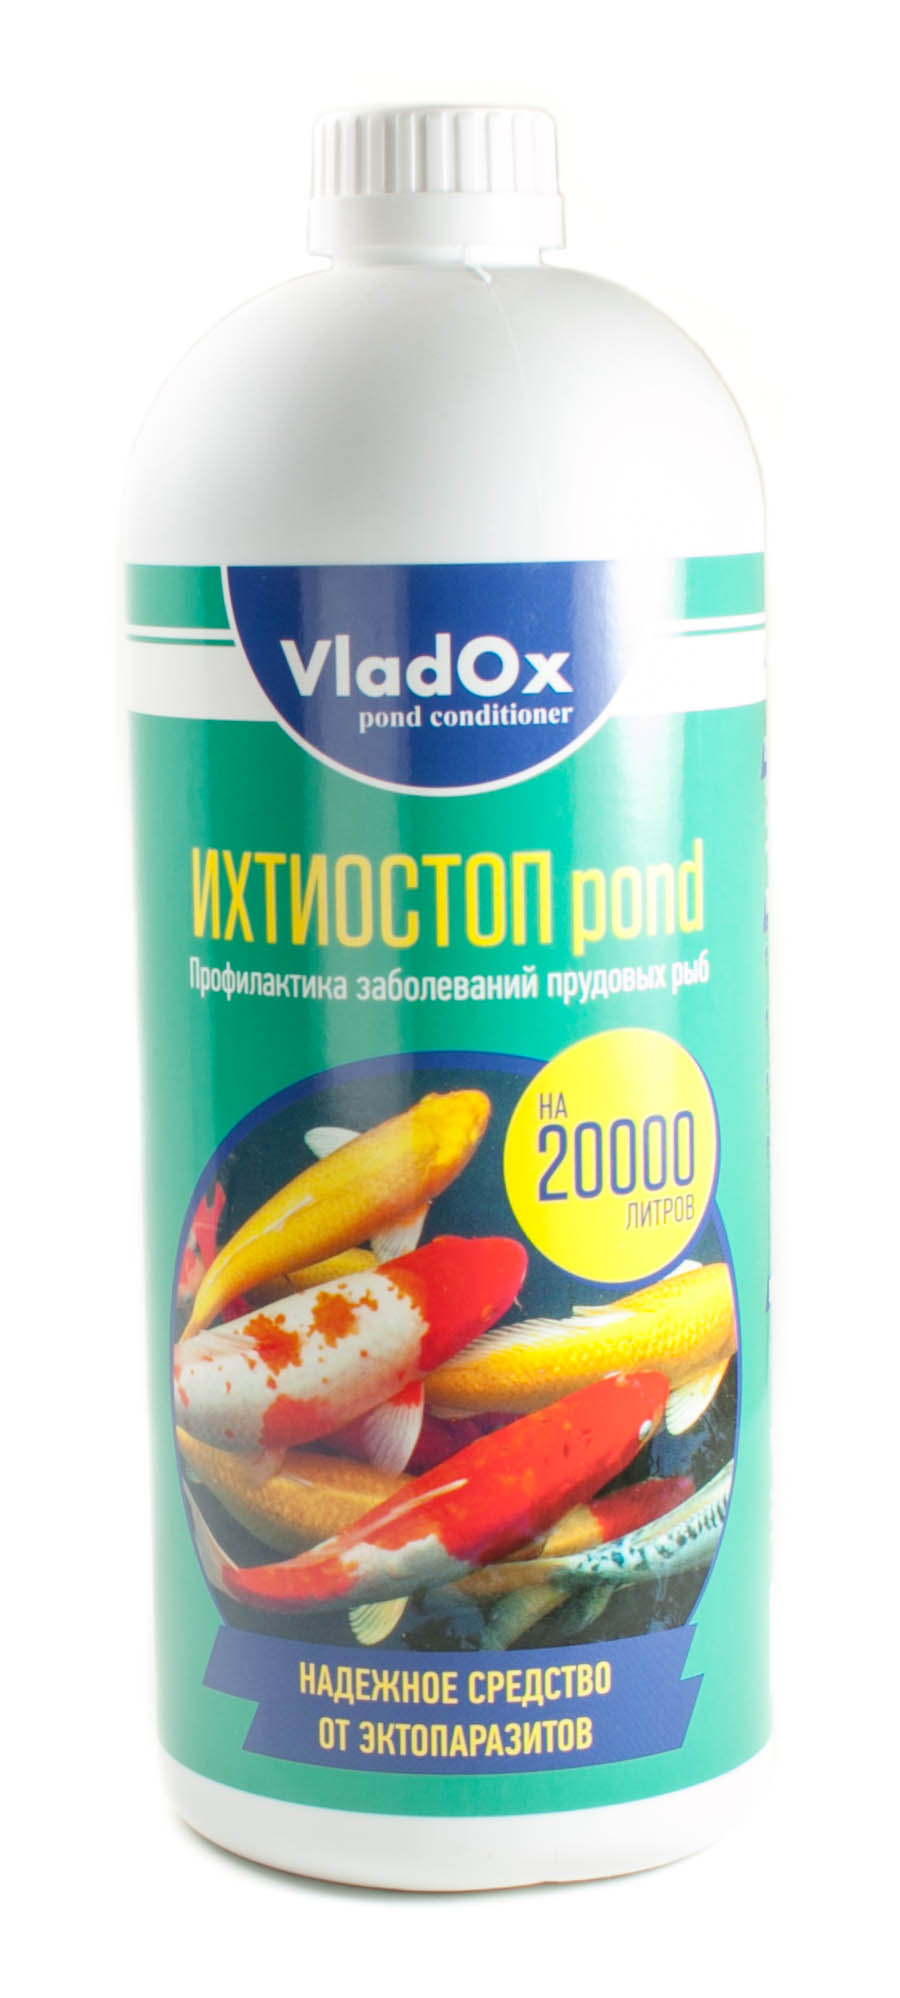 VladOx кондиционер ИХТИОСТОП pond 1000мл на 20000л